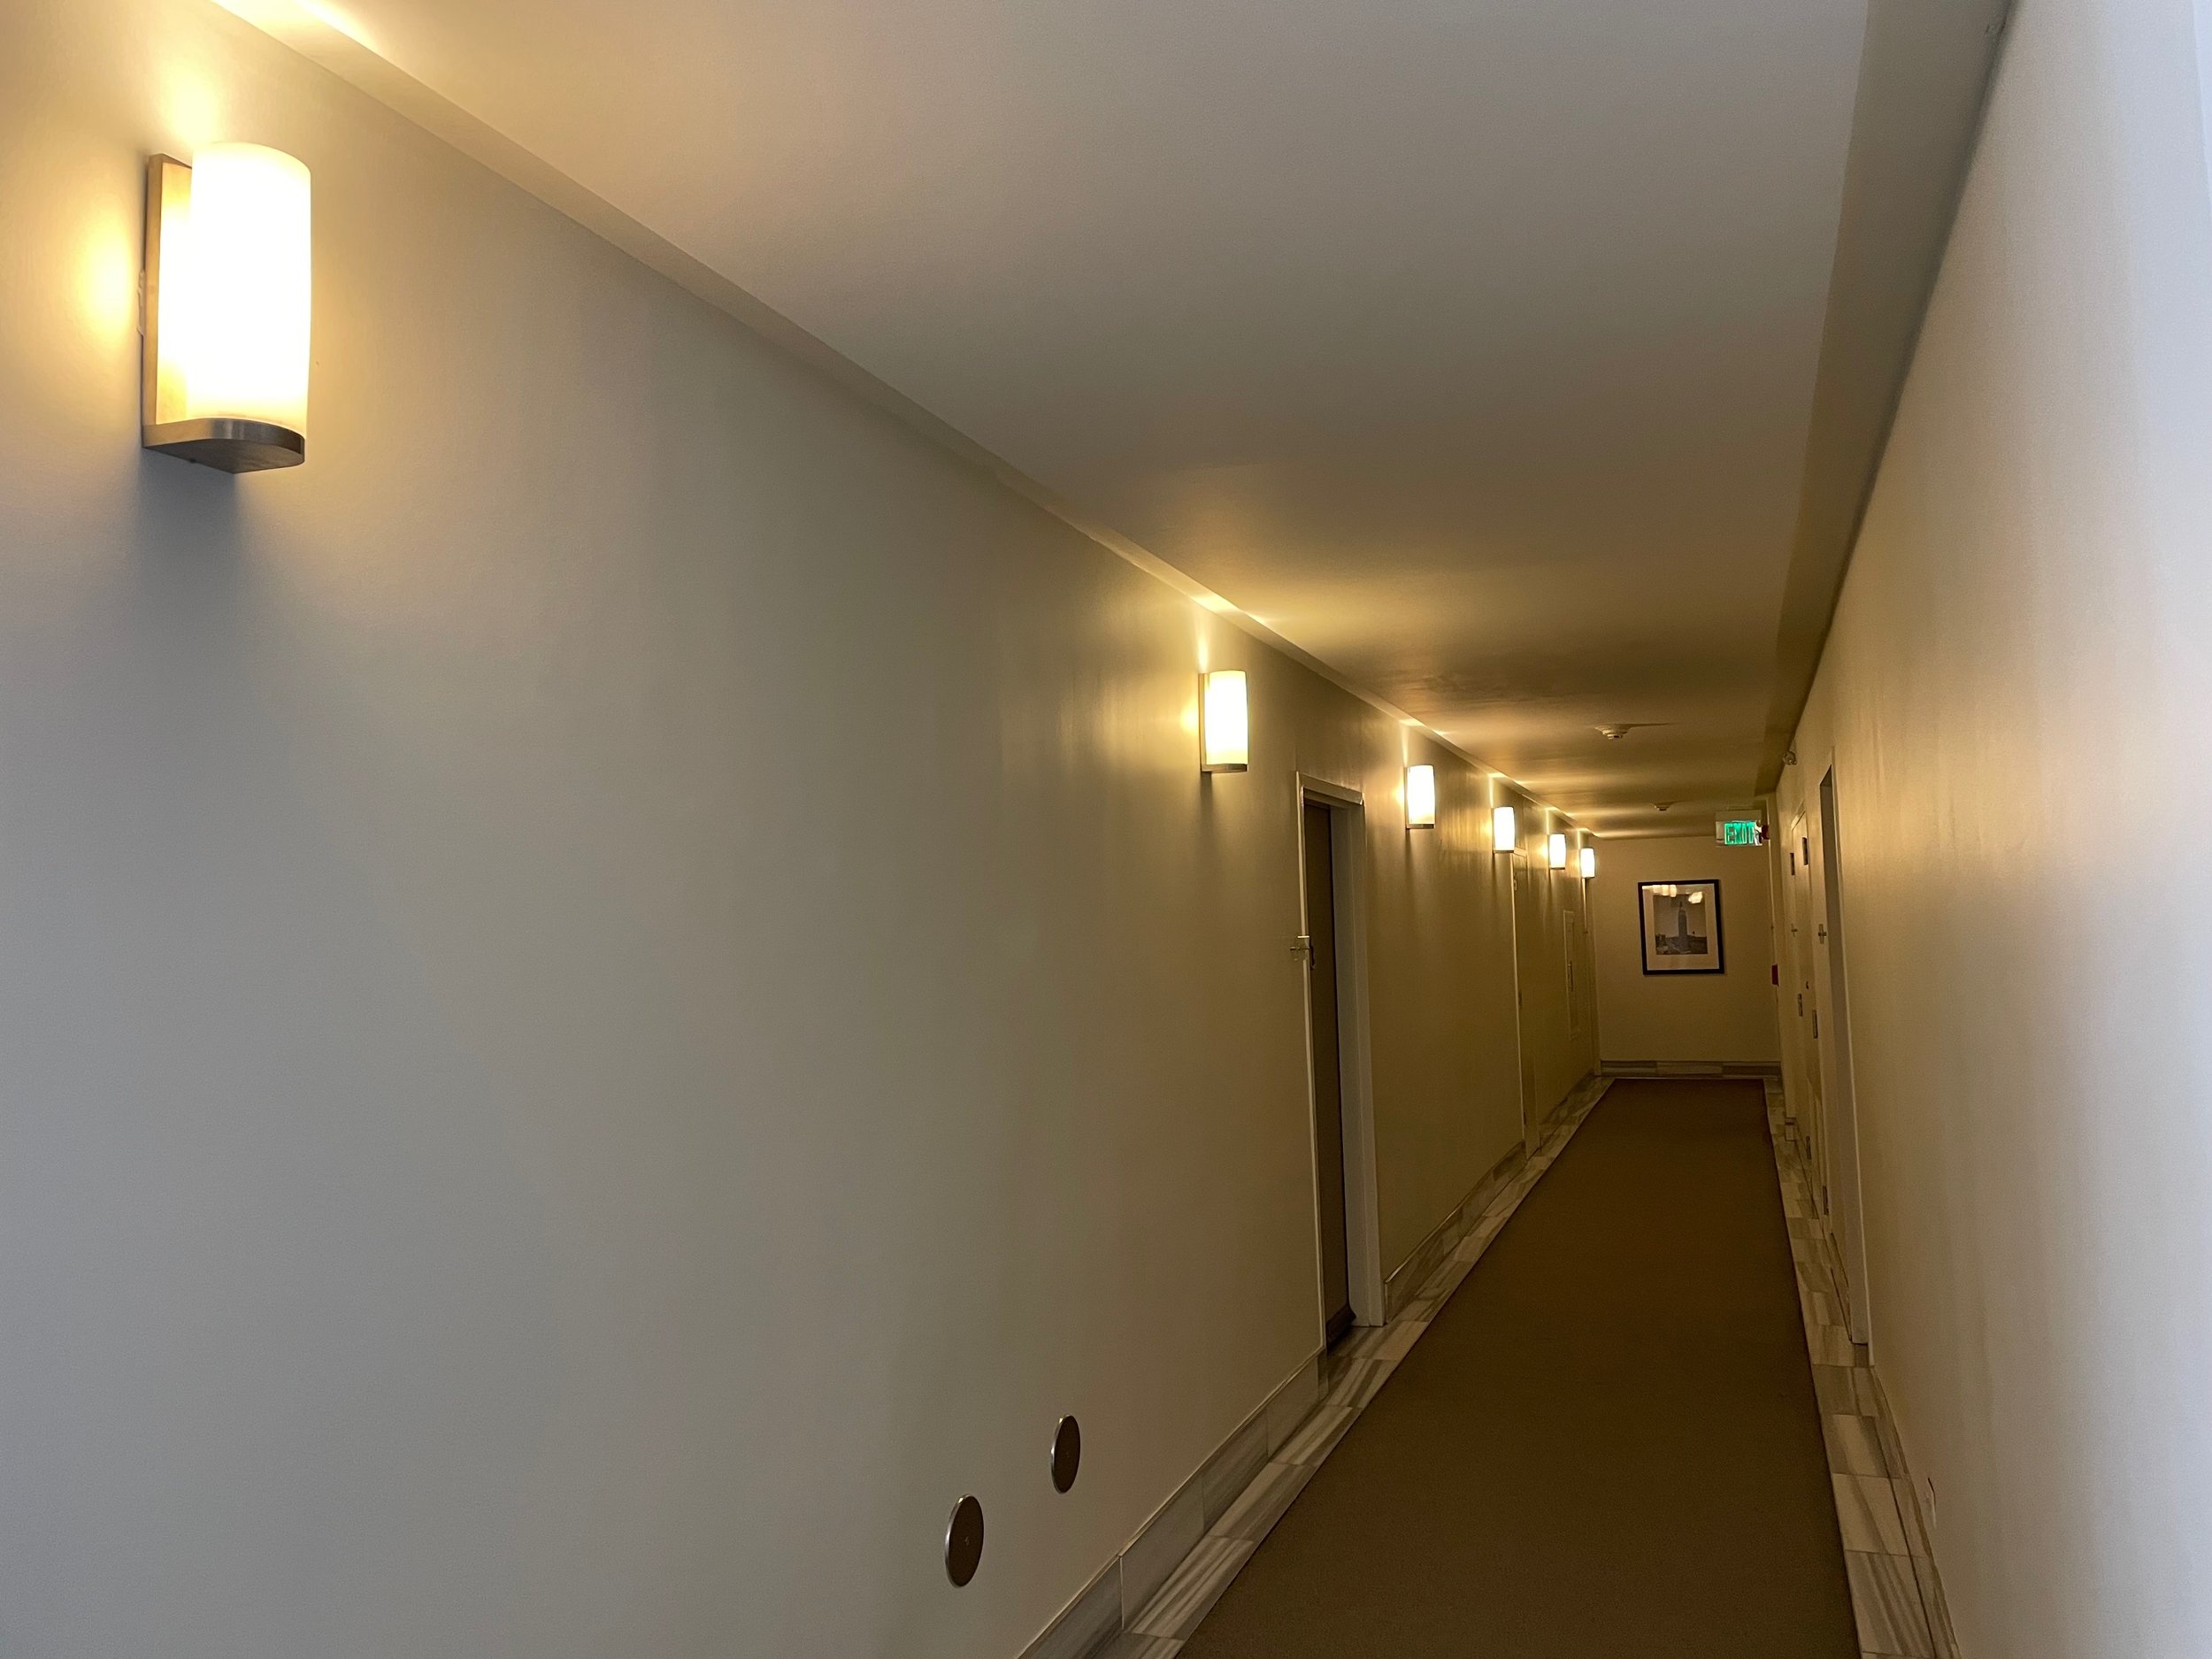  Hallway sconces 